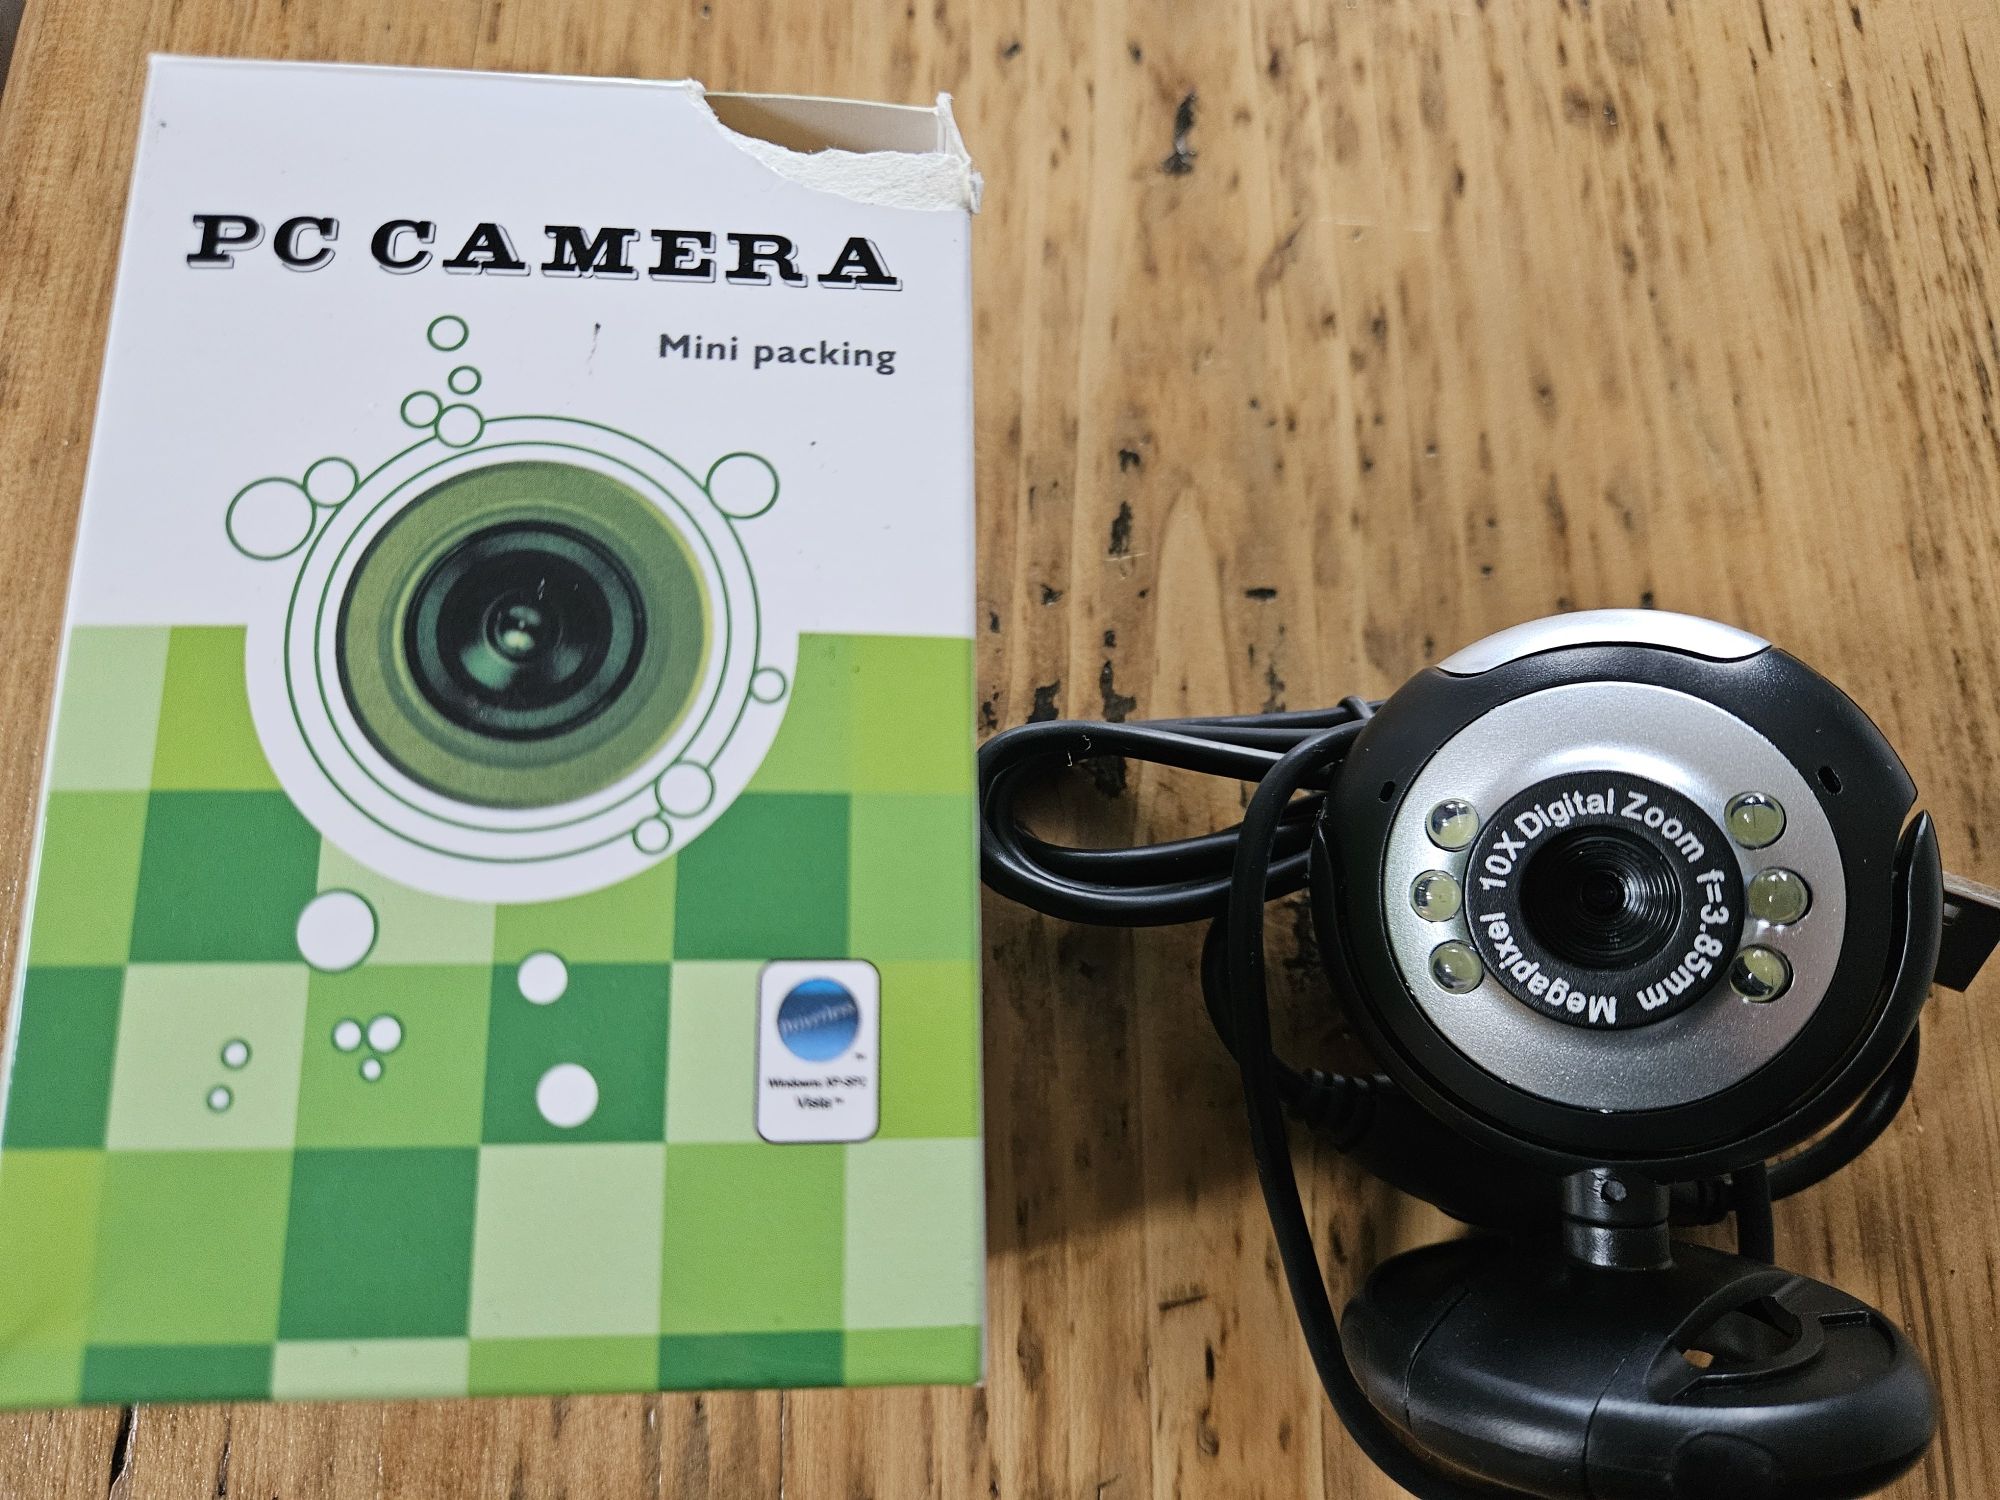 Kamera PC Camera Mini Packing